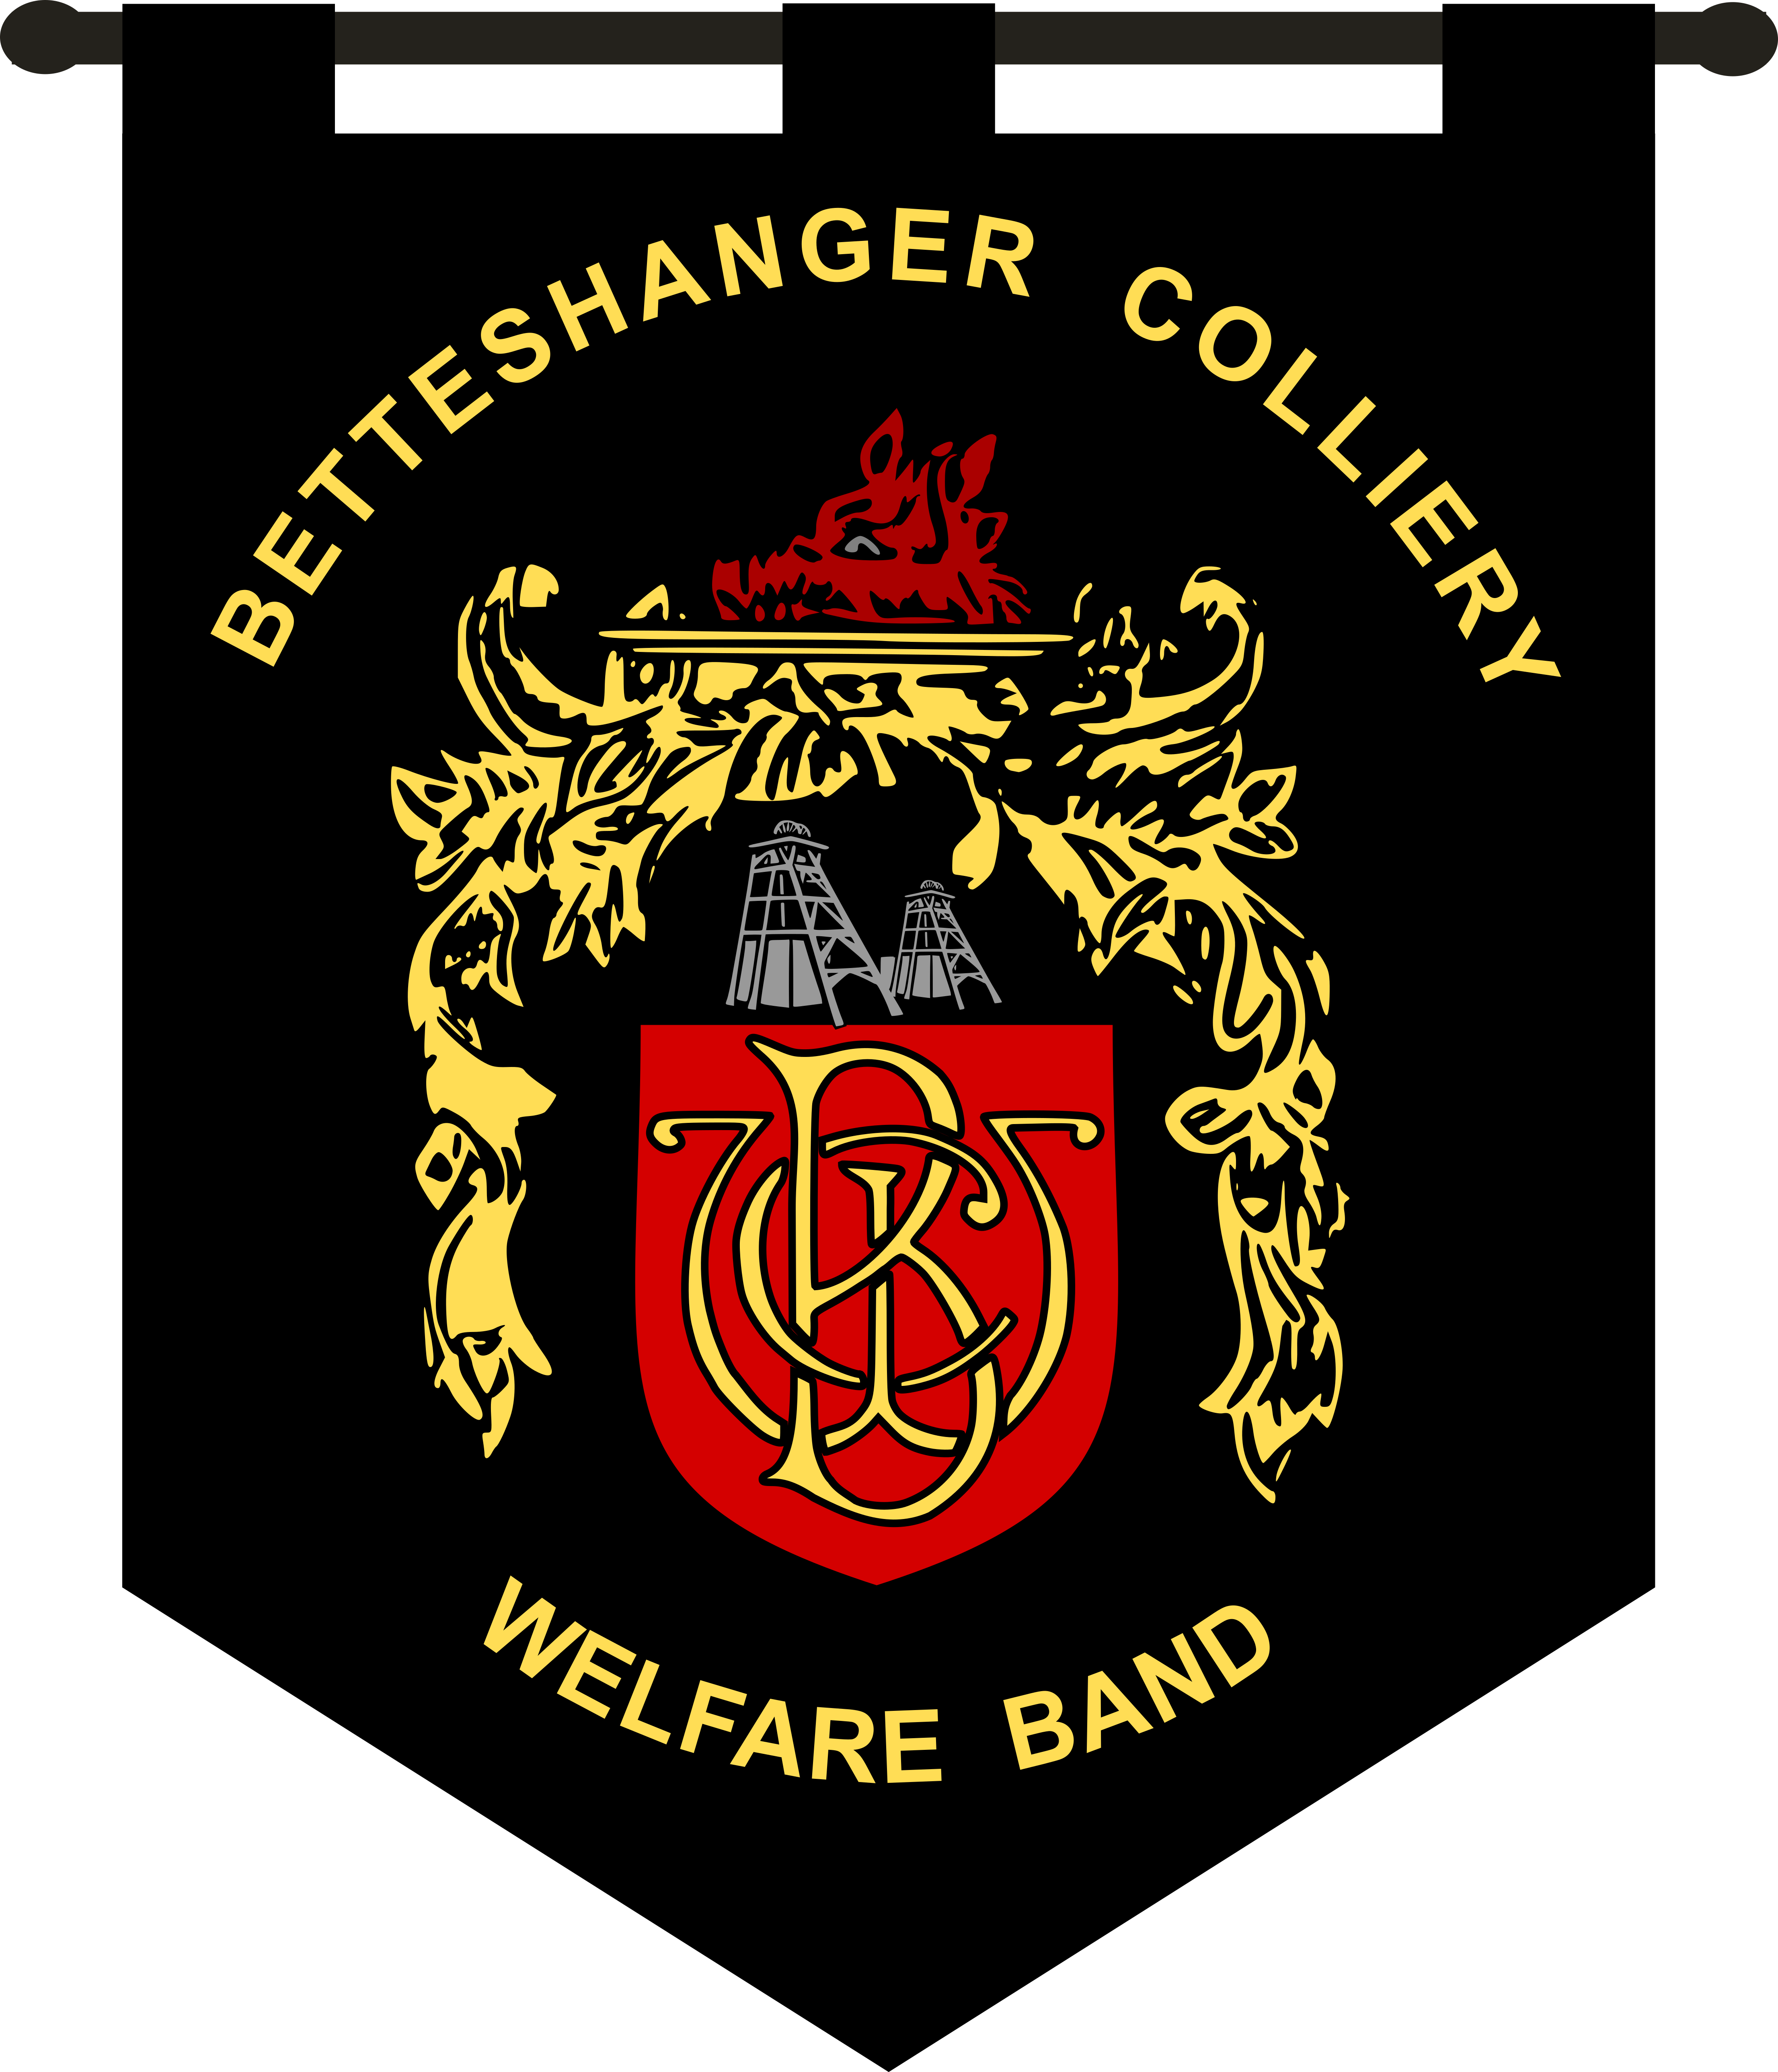 Betteshanger Colliery Welfare Band